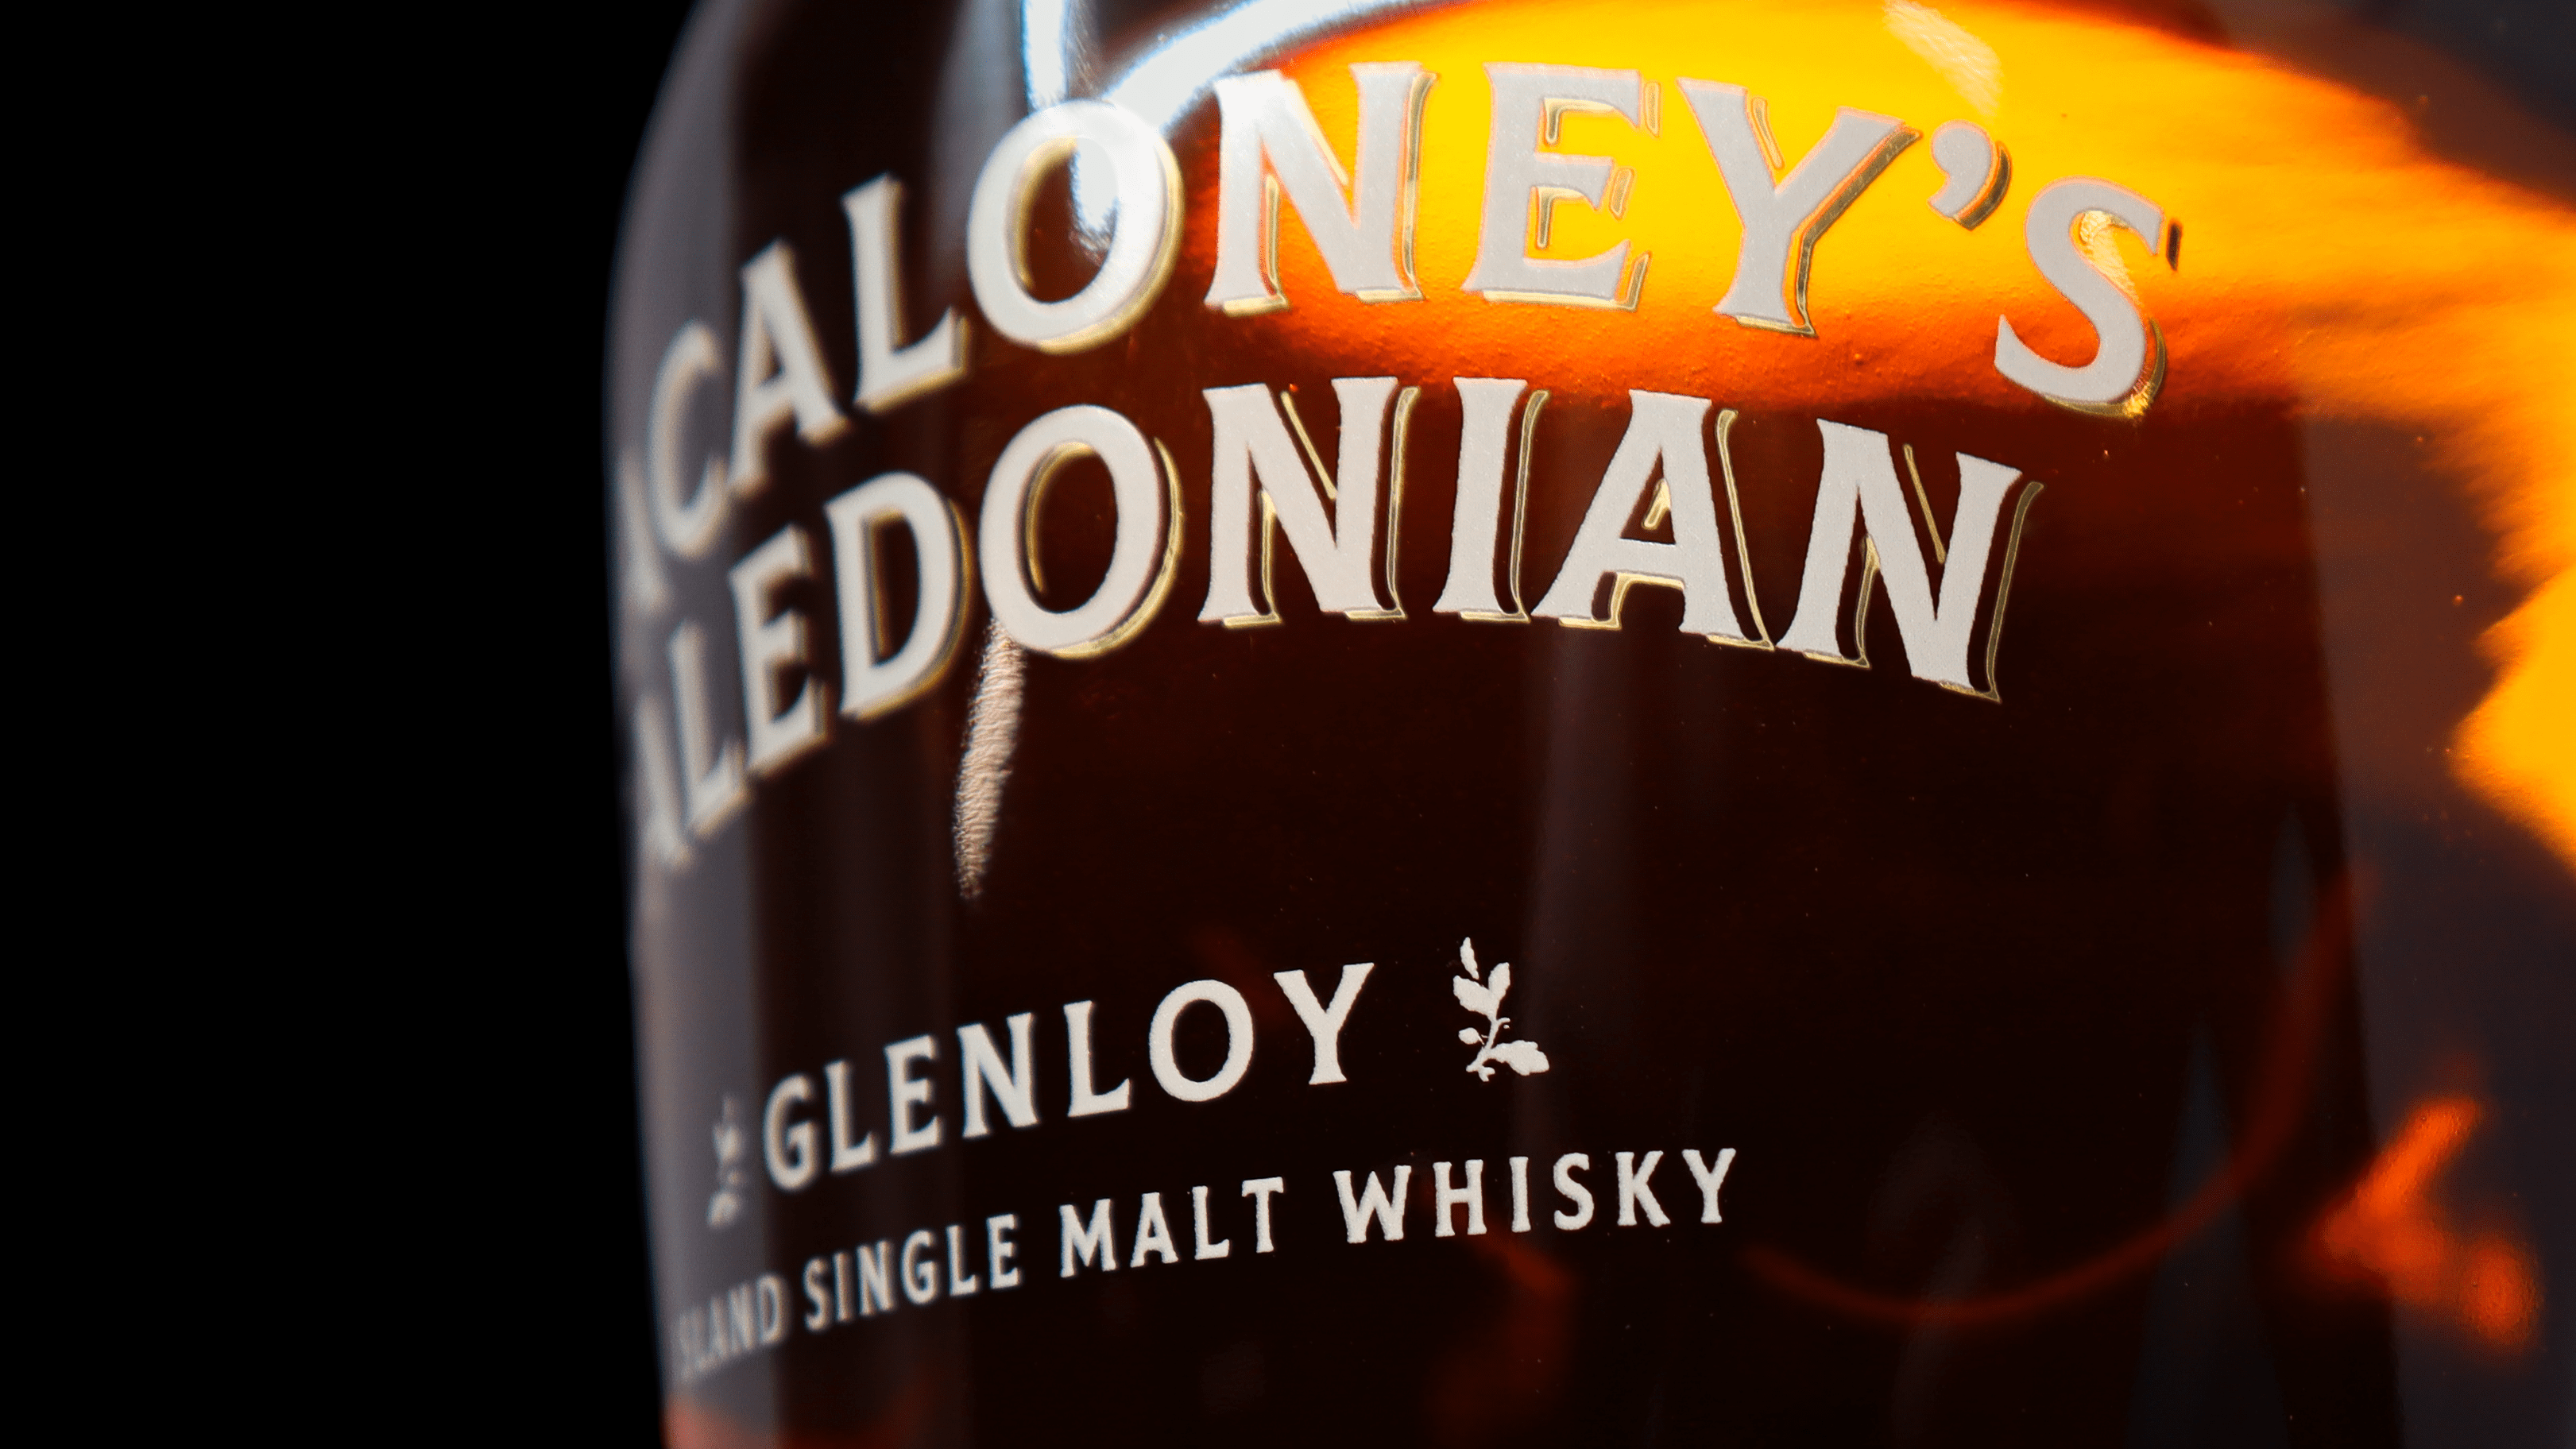 Macaloney’s Caledonian Inaugural Single Malt Whiskies